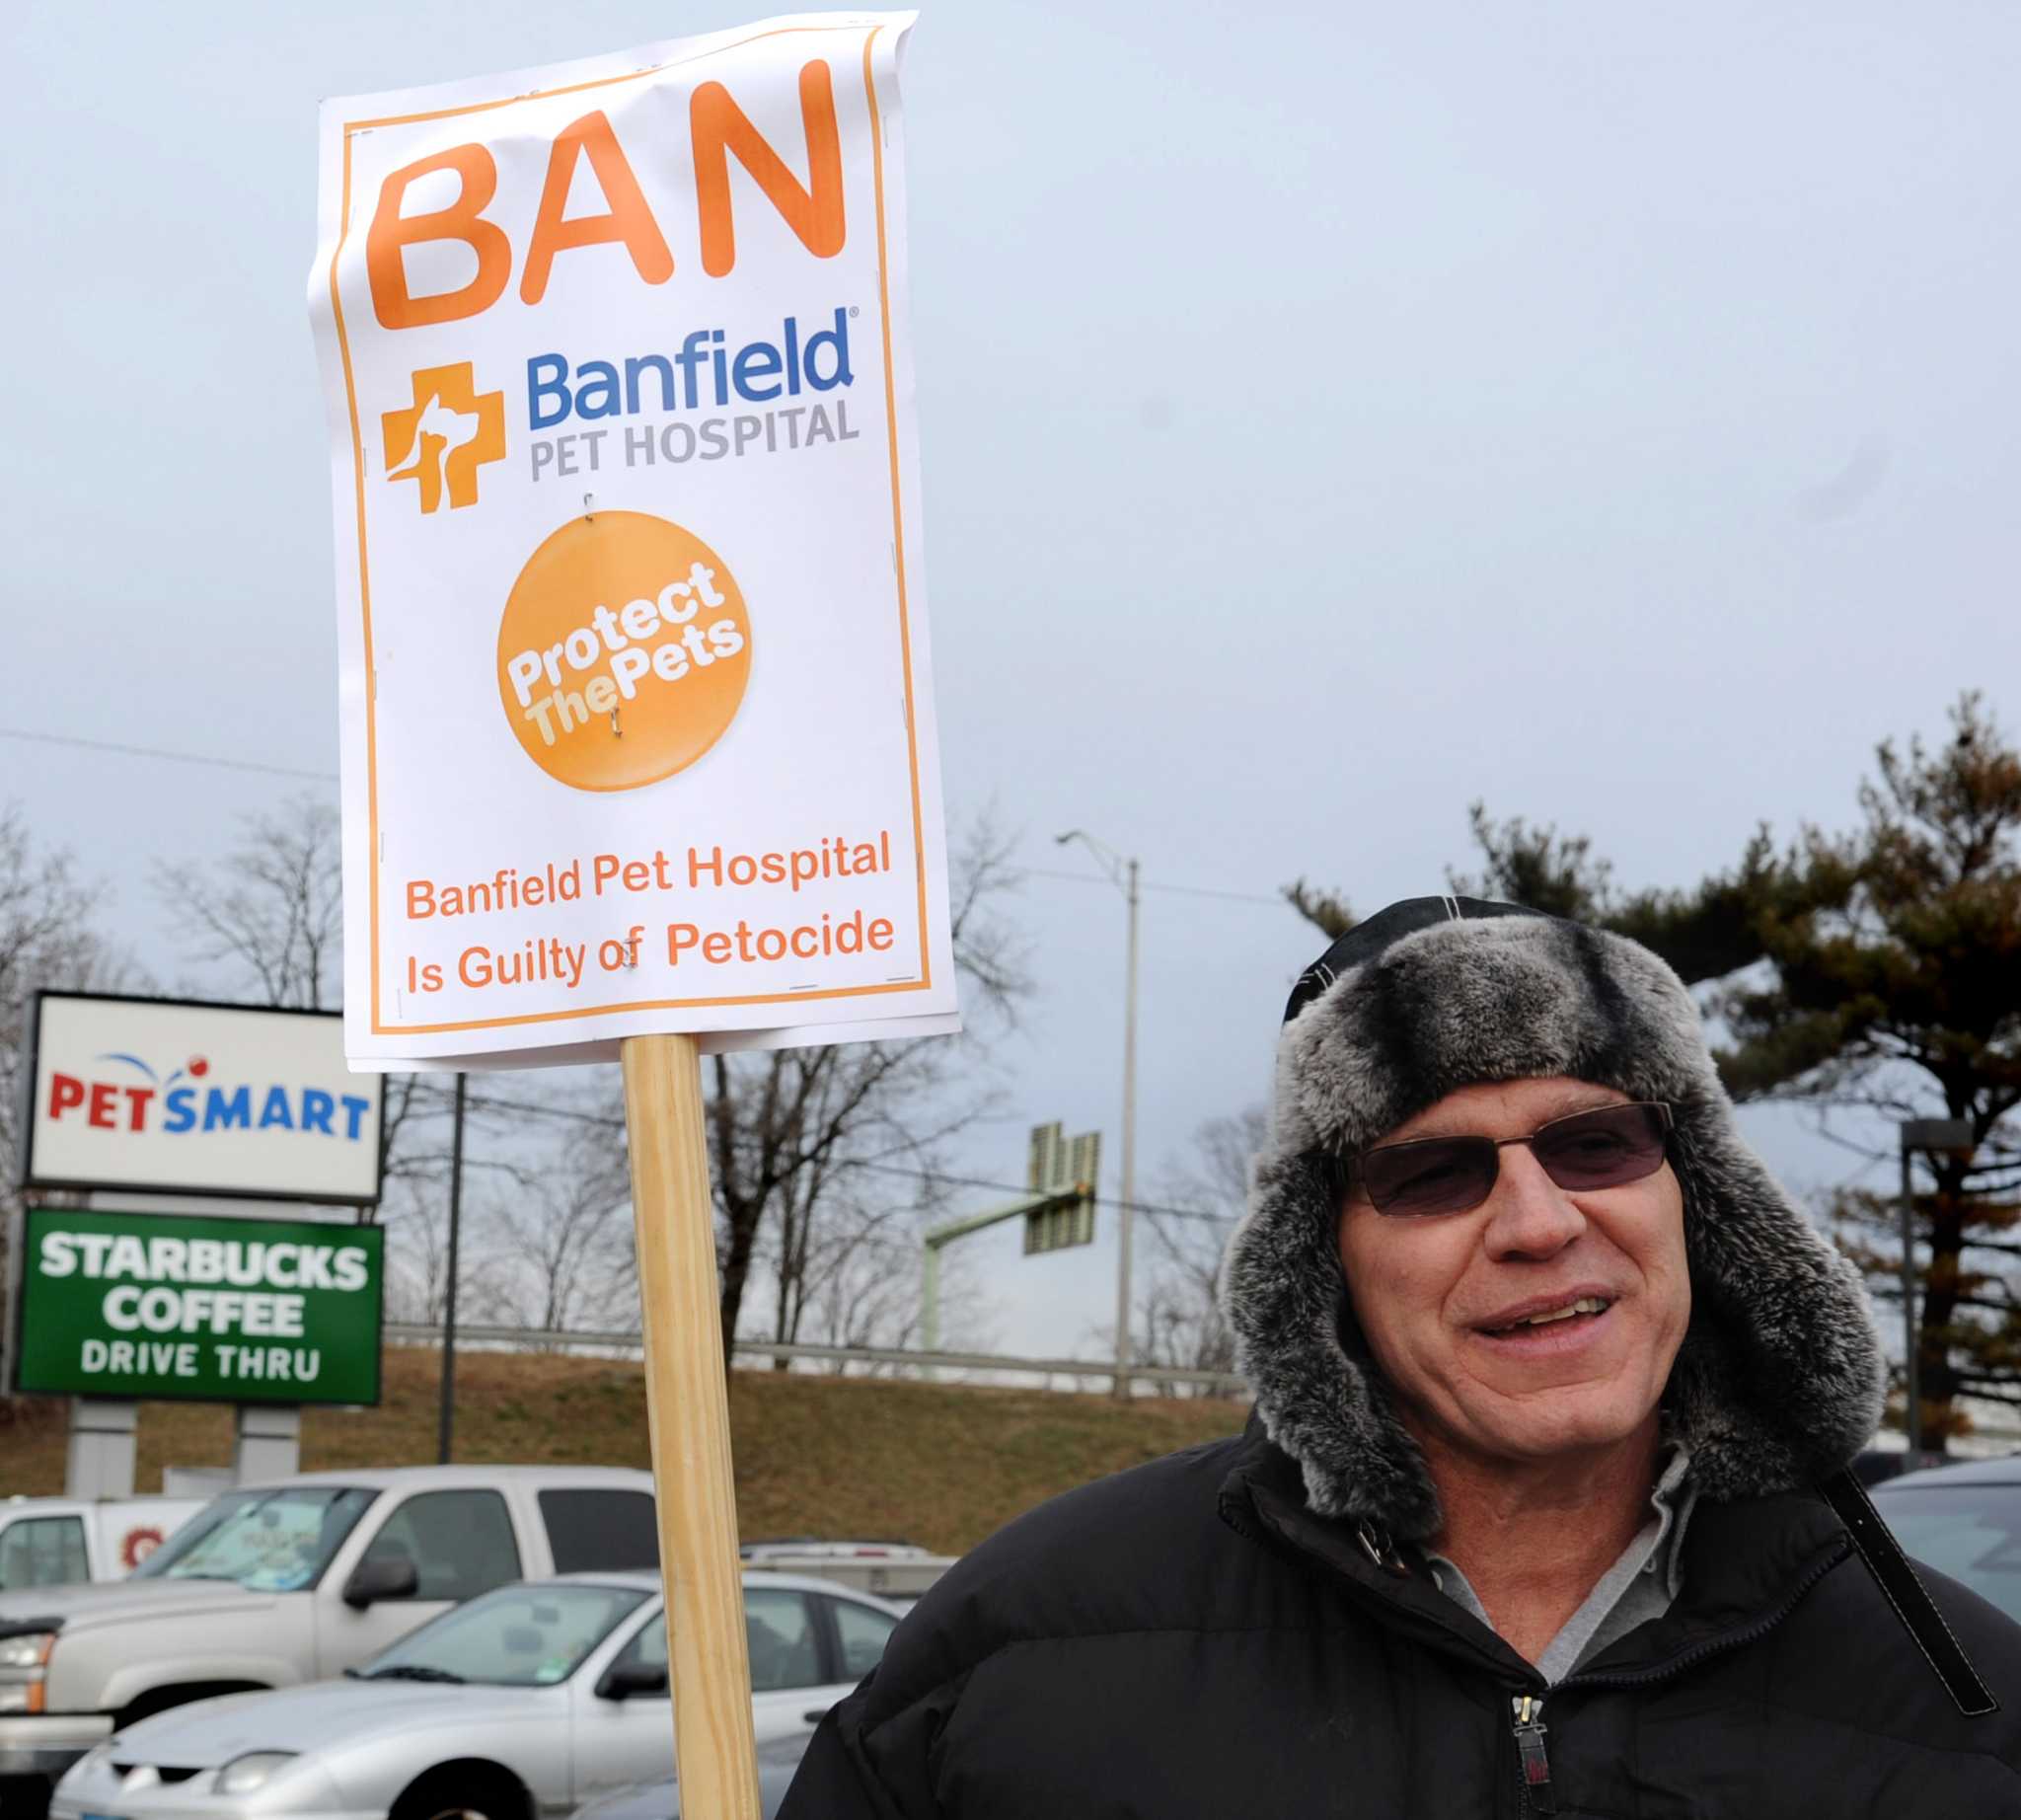 banfield hospital at petsmart